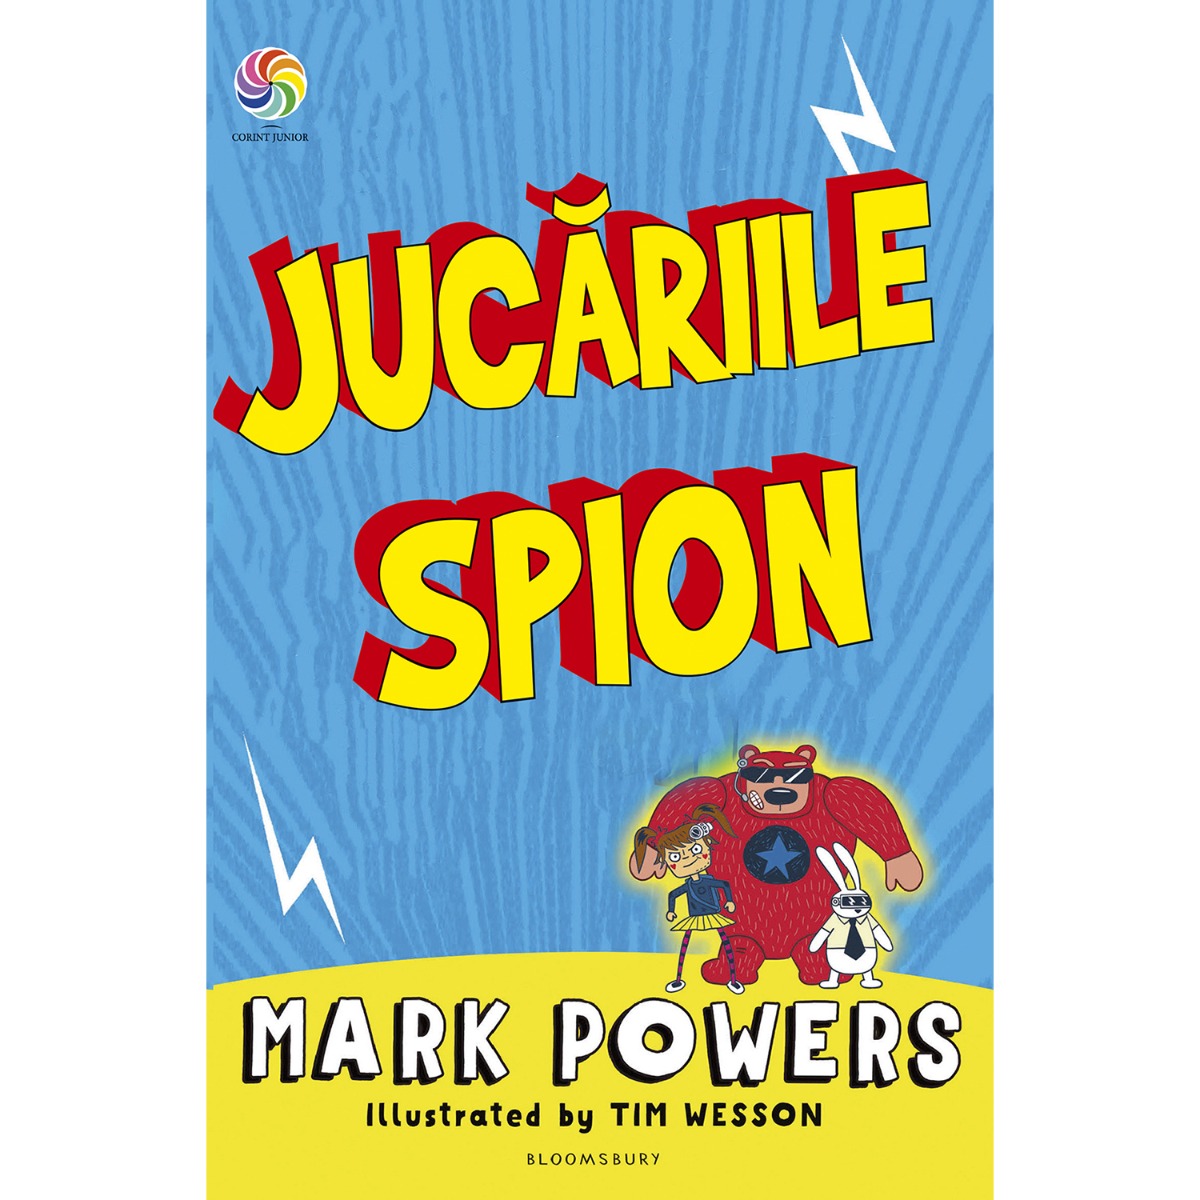 Carte Editura Corint, Jucariile Spion, Mark Powers